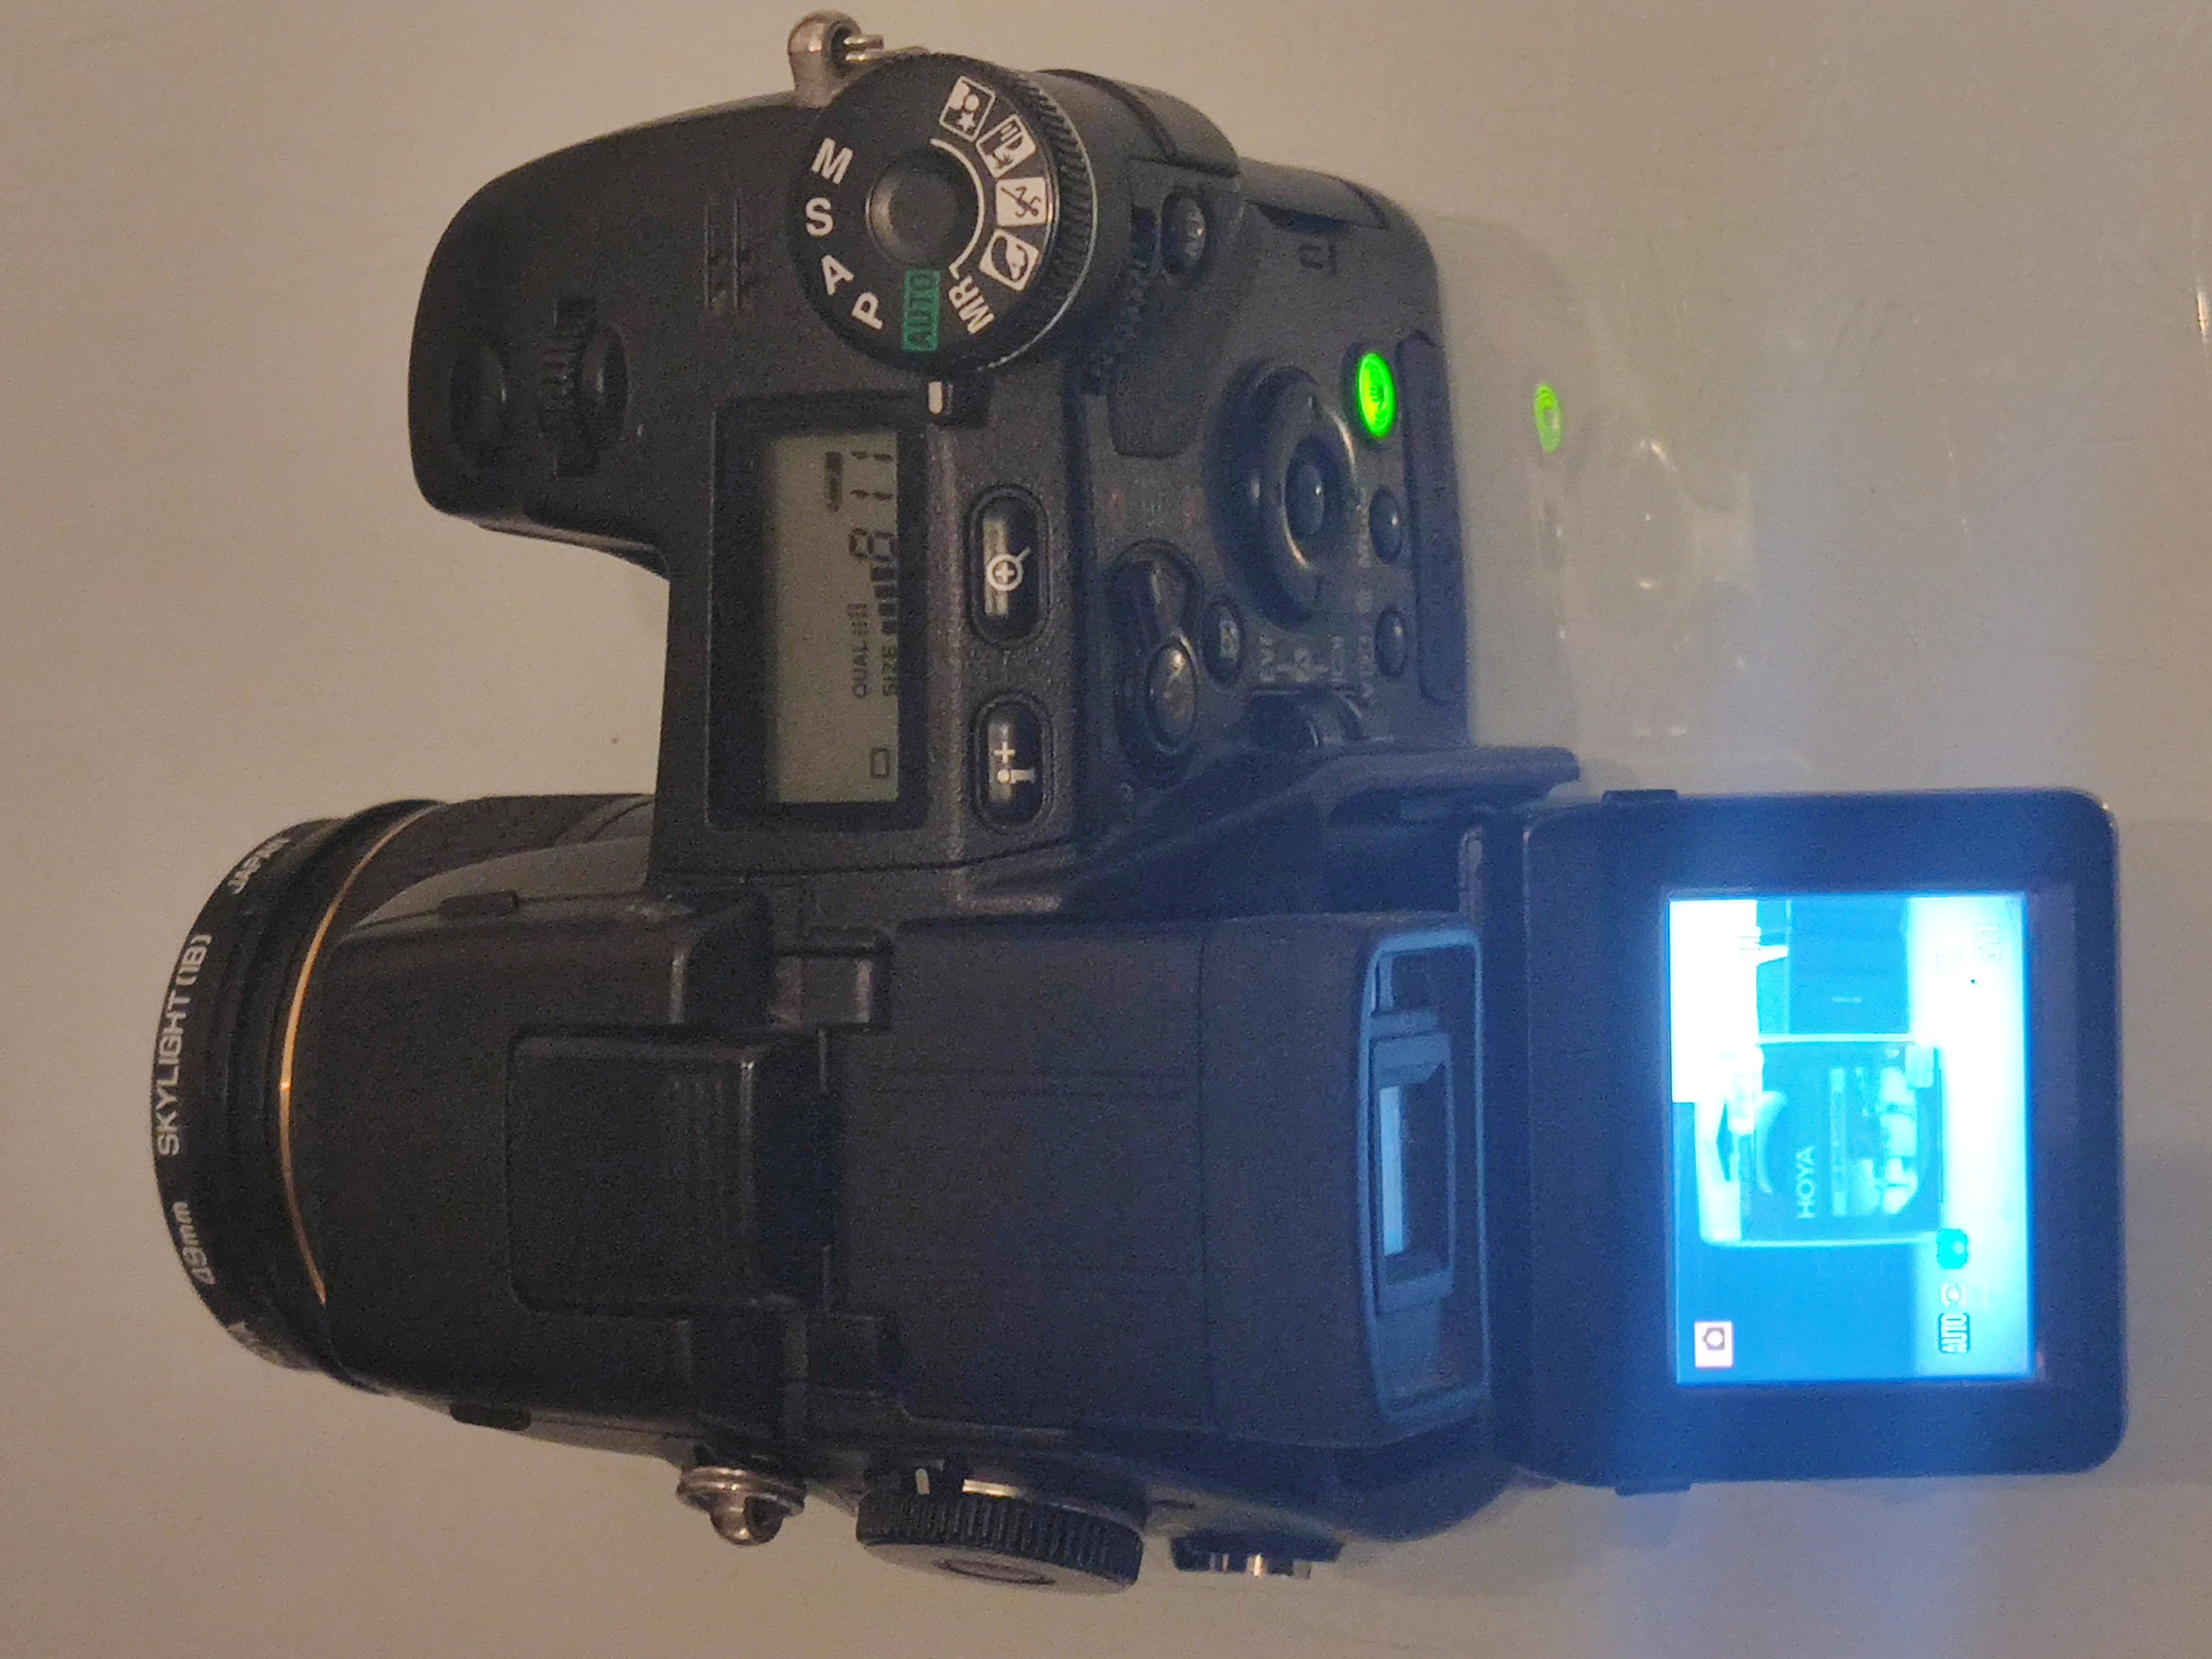 A Konica Minolta Dimage A2 Digital Camera Kit. 2 X Batteries, Wide Lens Converter and More. - Image 3 of 7